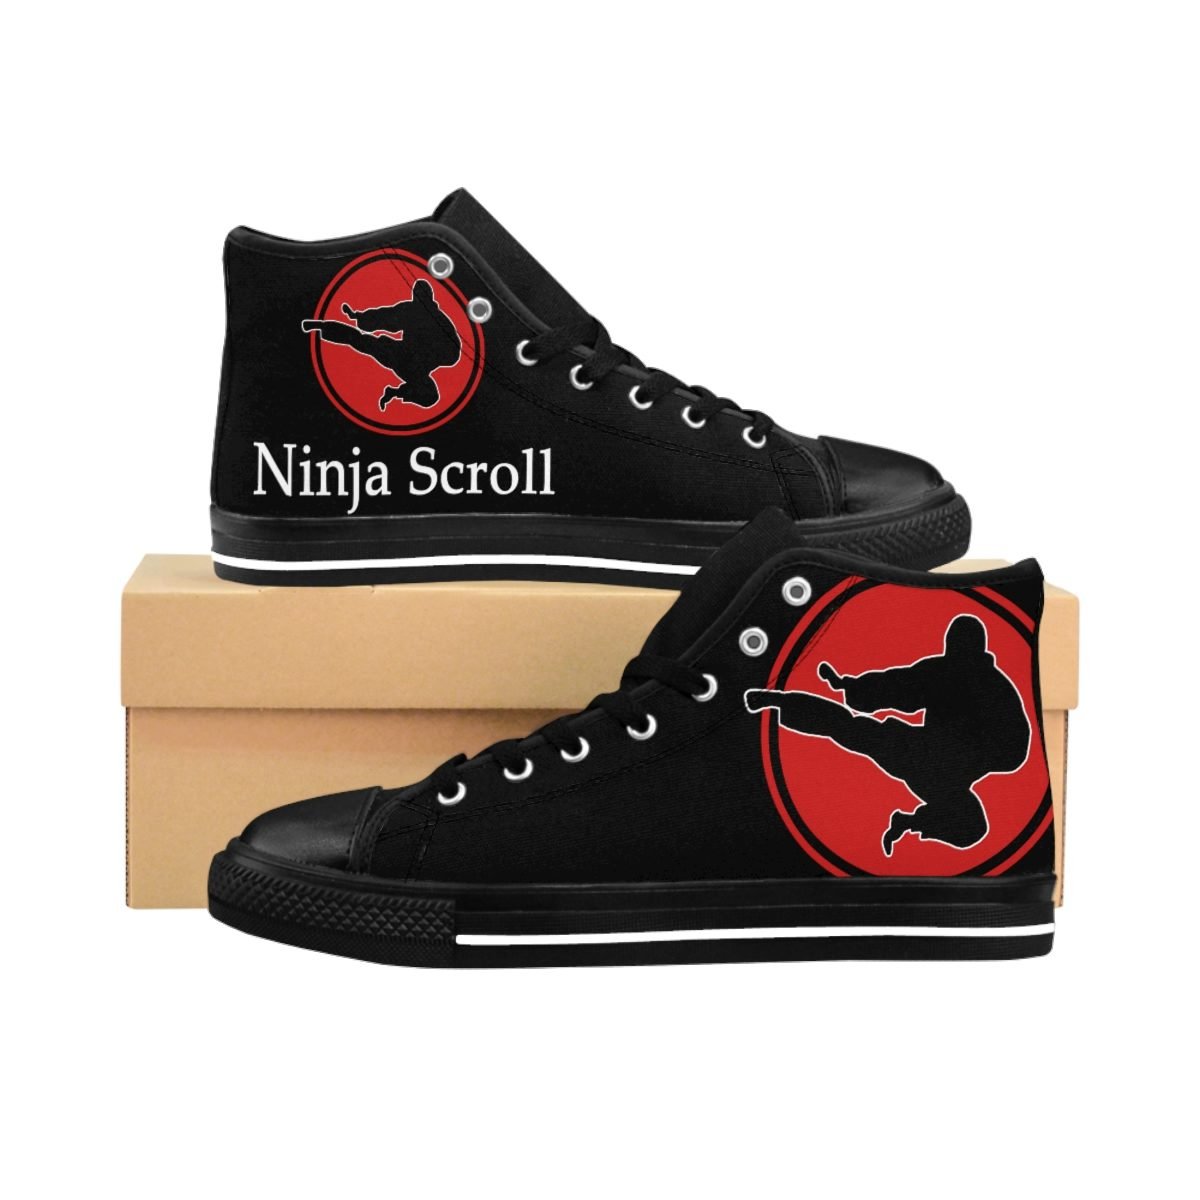 Ninja Scroll Flying Kick Women’s High-top Sneakers